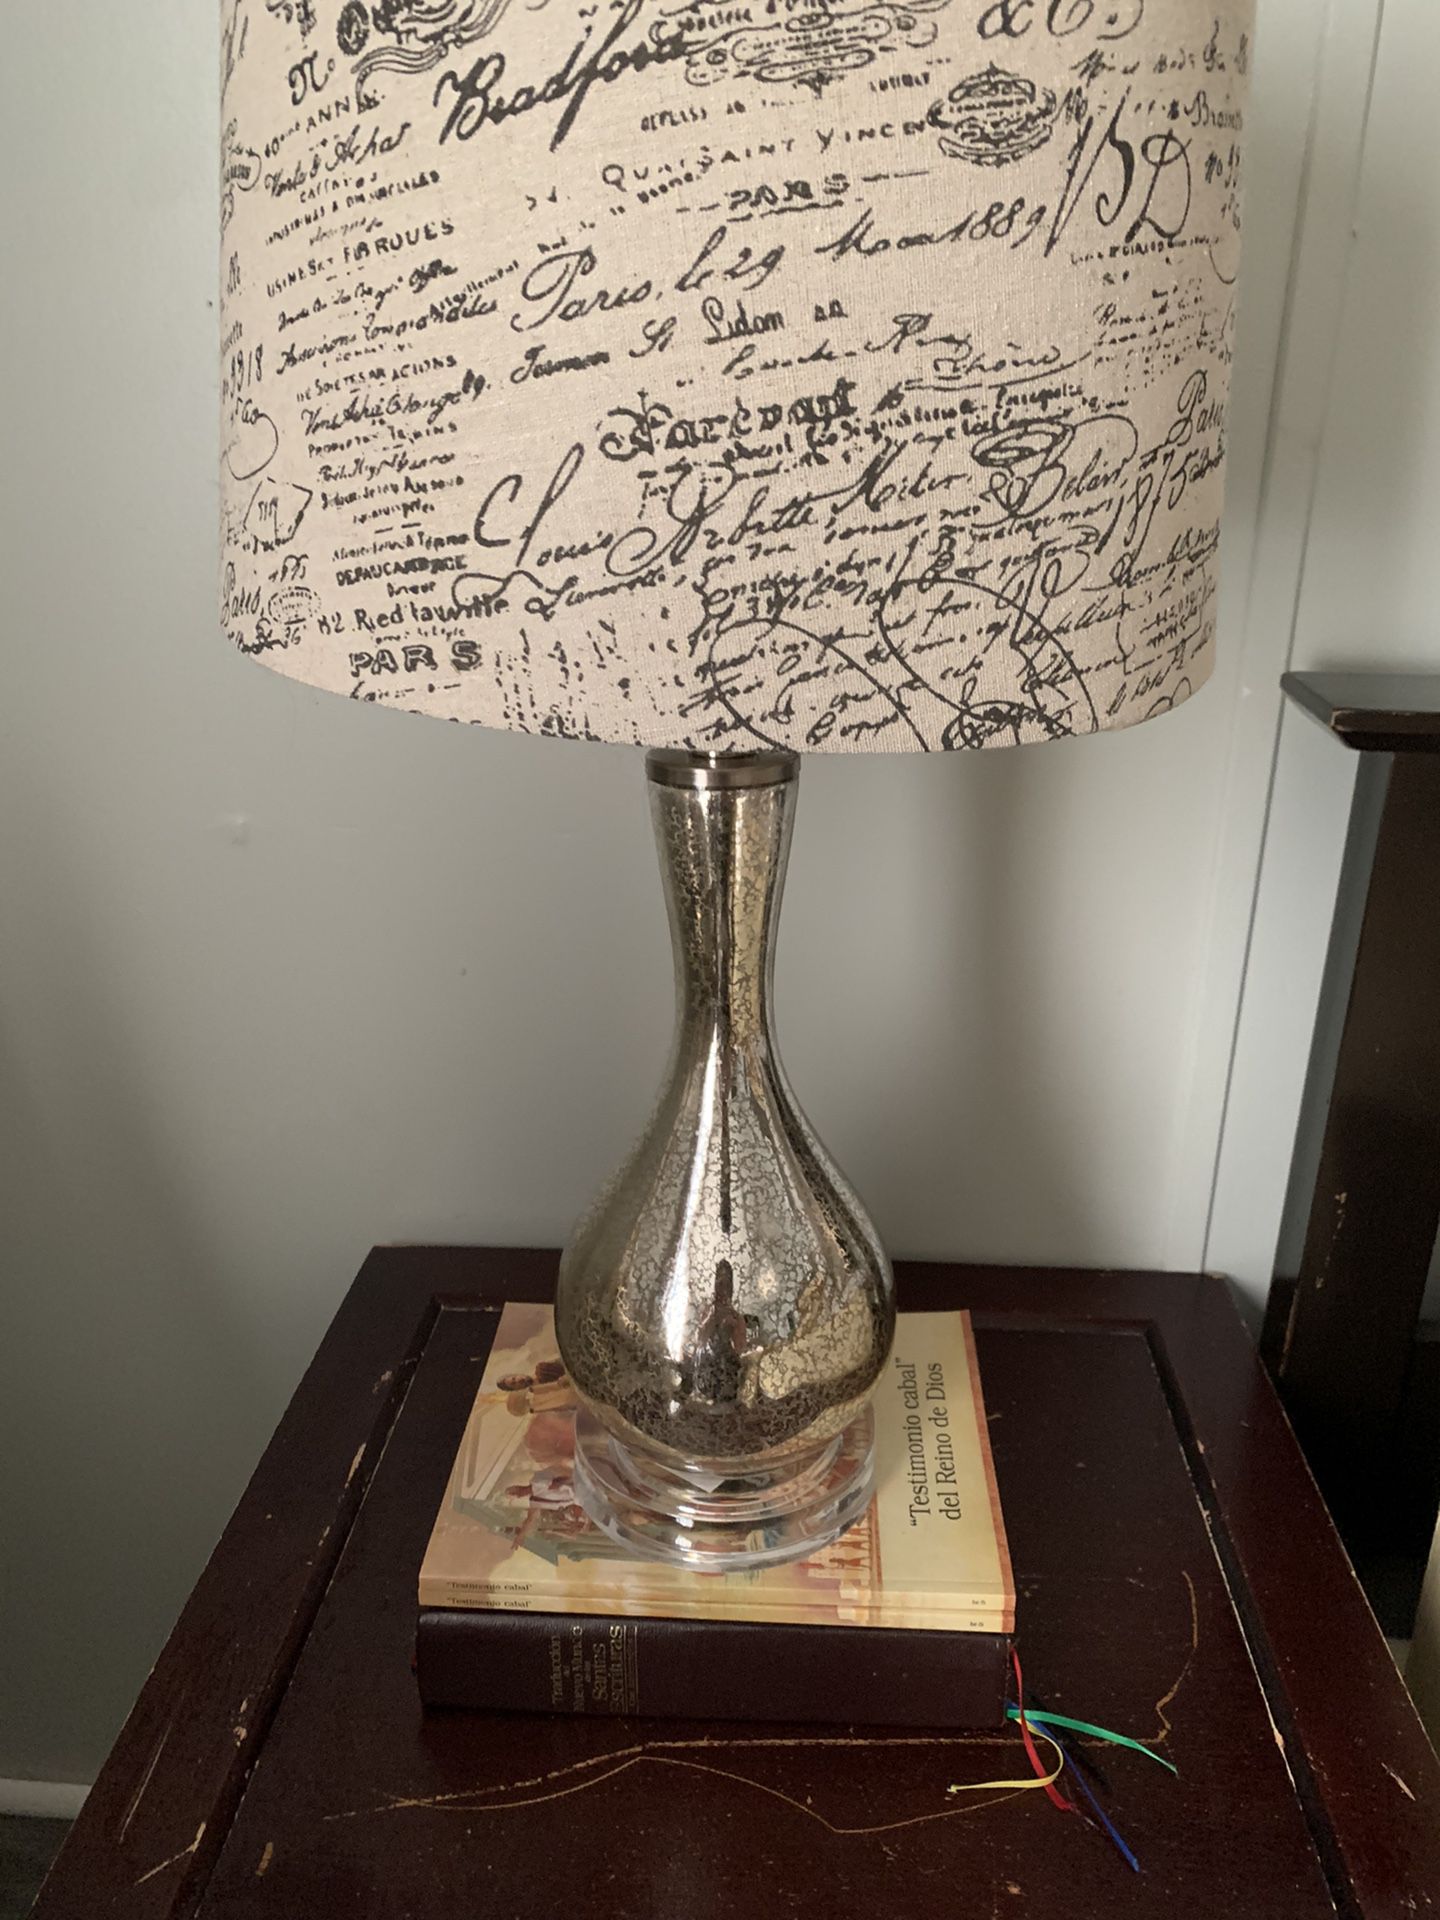 Beautiful  Lamp  With Frenc Writing 